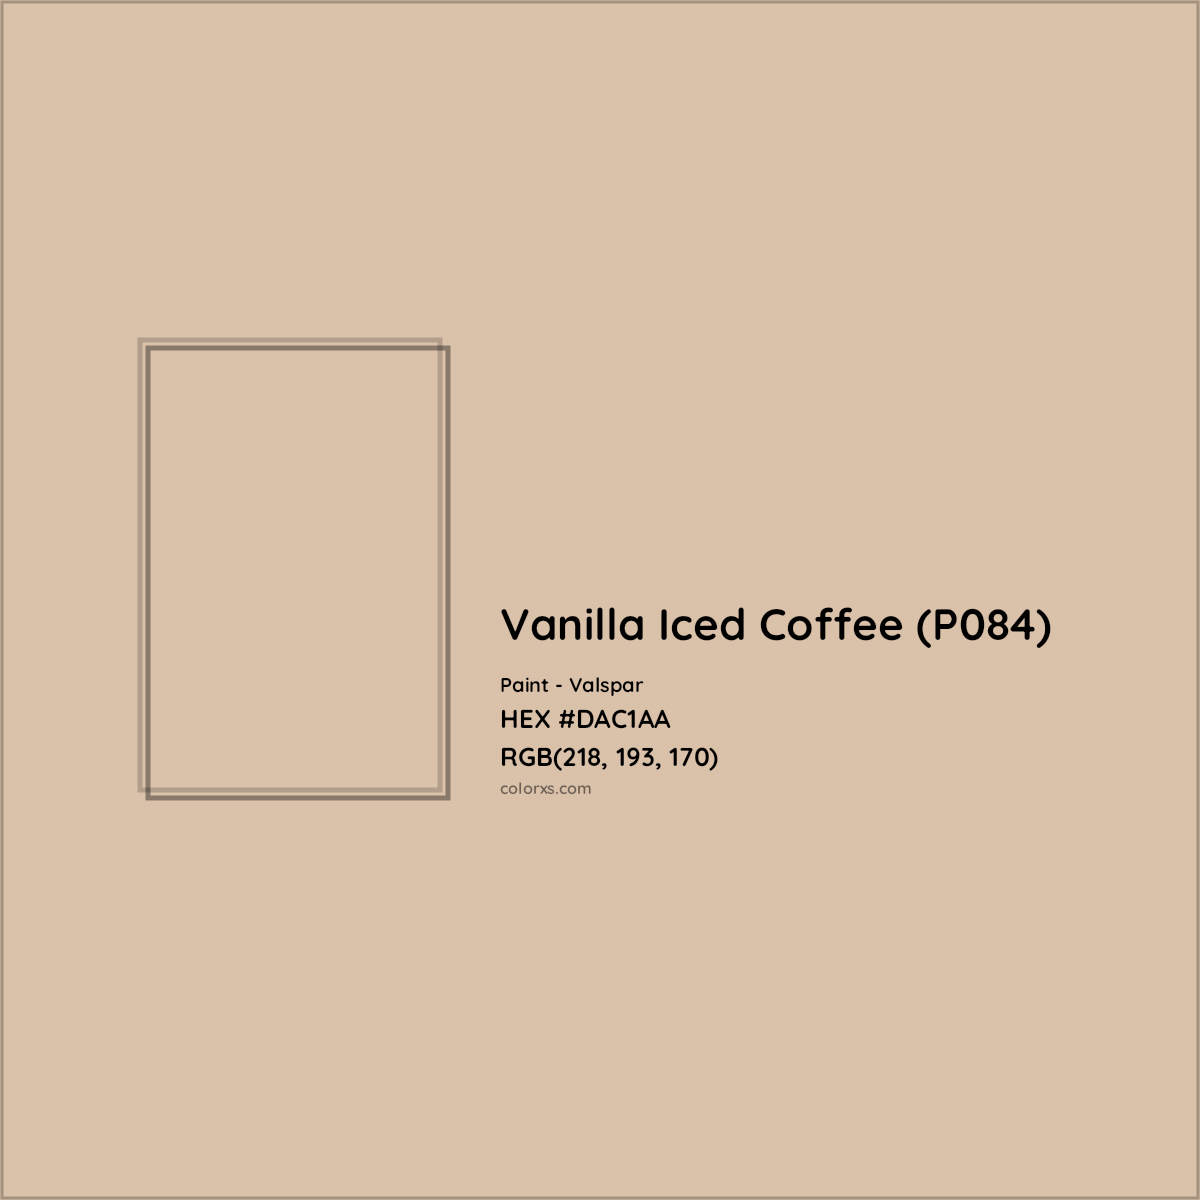 HEX #DAC1AA Vanilla Iced Coffee (P084) Paint Valspar - Color Code